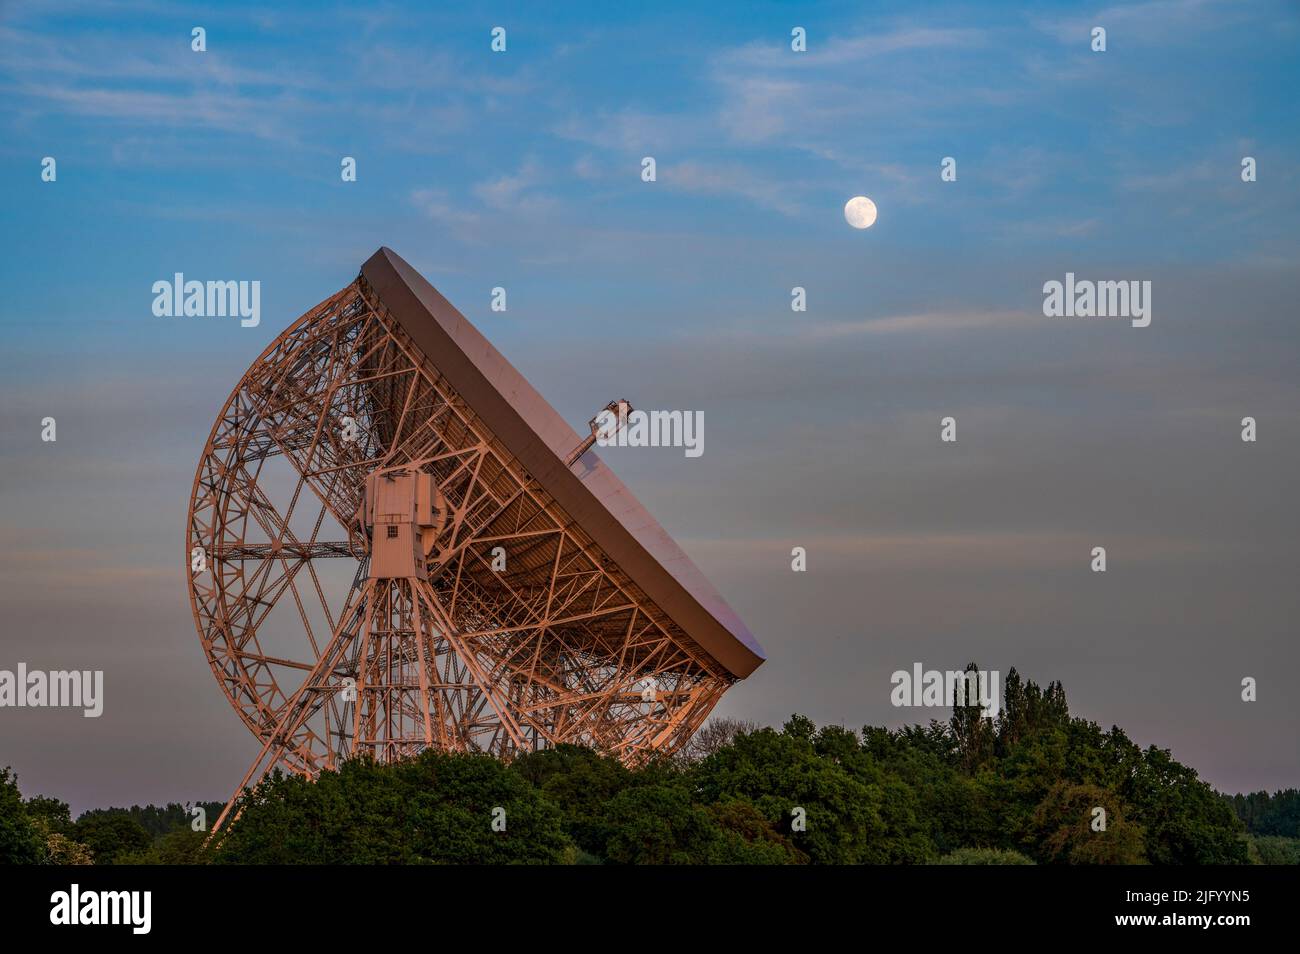 The Lovell Mark I Giant radio Telescope avec alignement parfait avec la pleine lune, Jodrell Bank, Cheshire, Angleterre, Royaume-Uni, Europe Banque D'Images